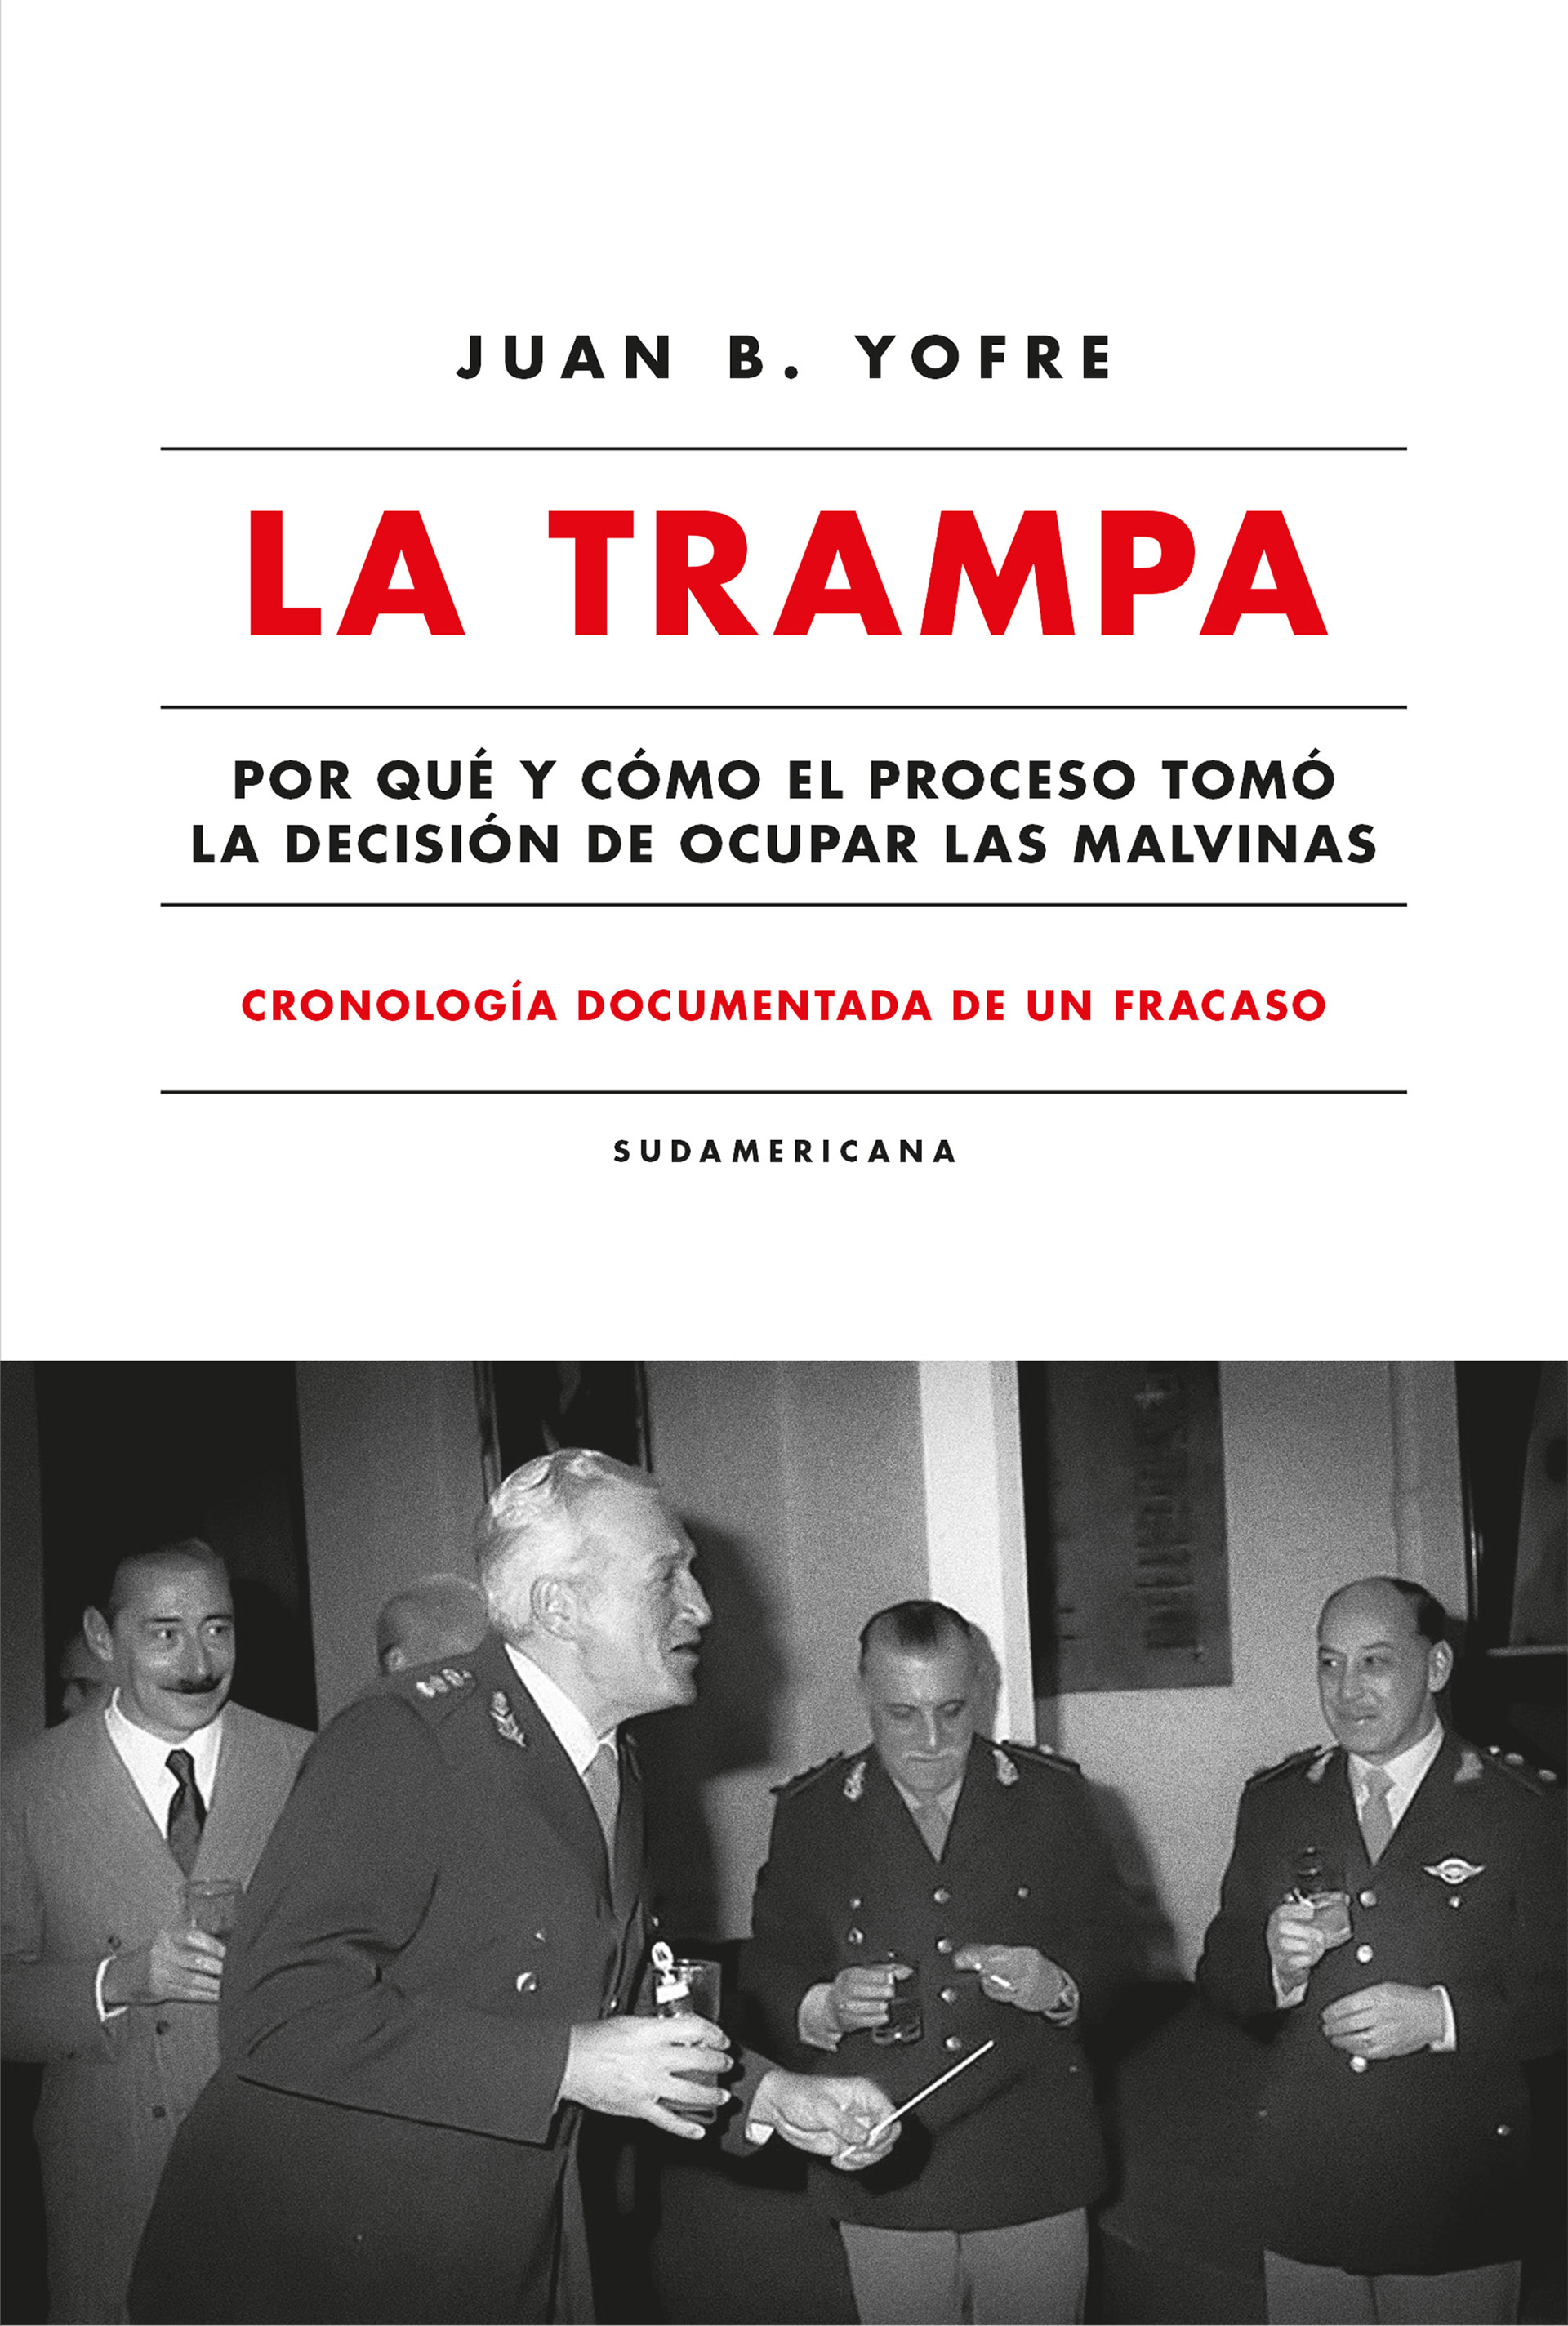 La tapa del libro escrito por Juan Bautista "Tata" Yofre